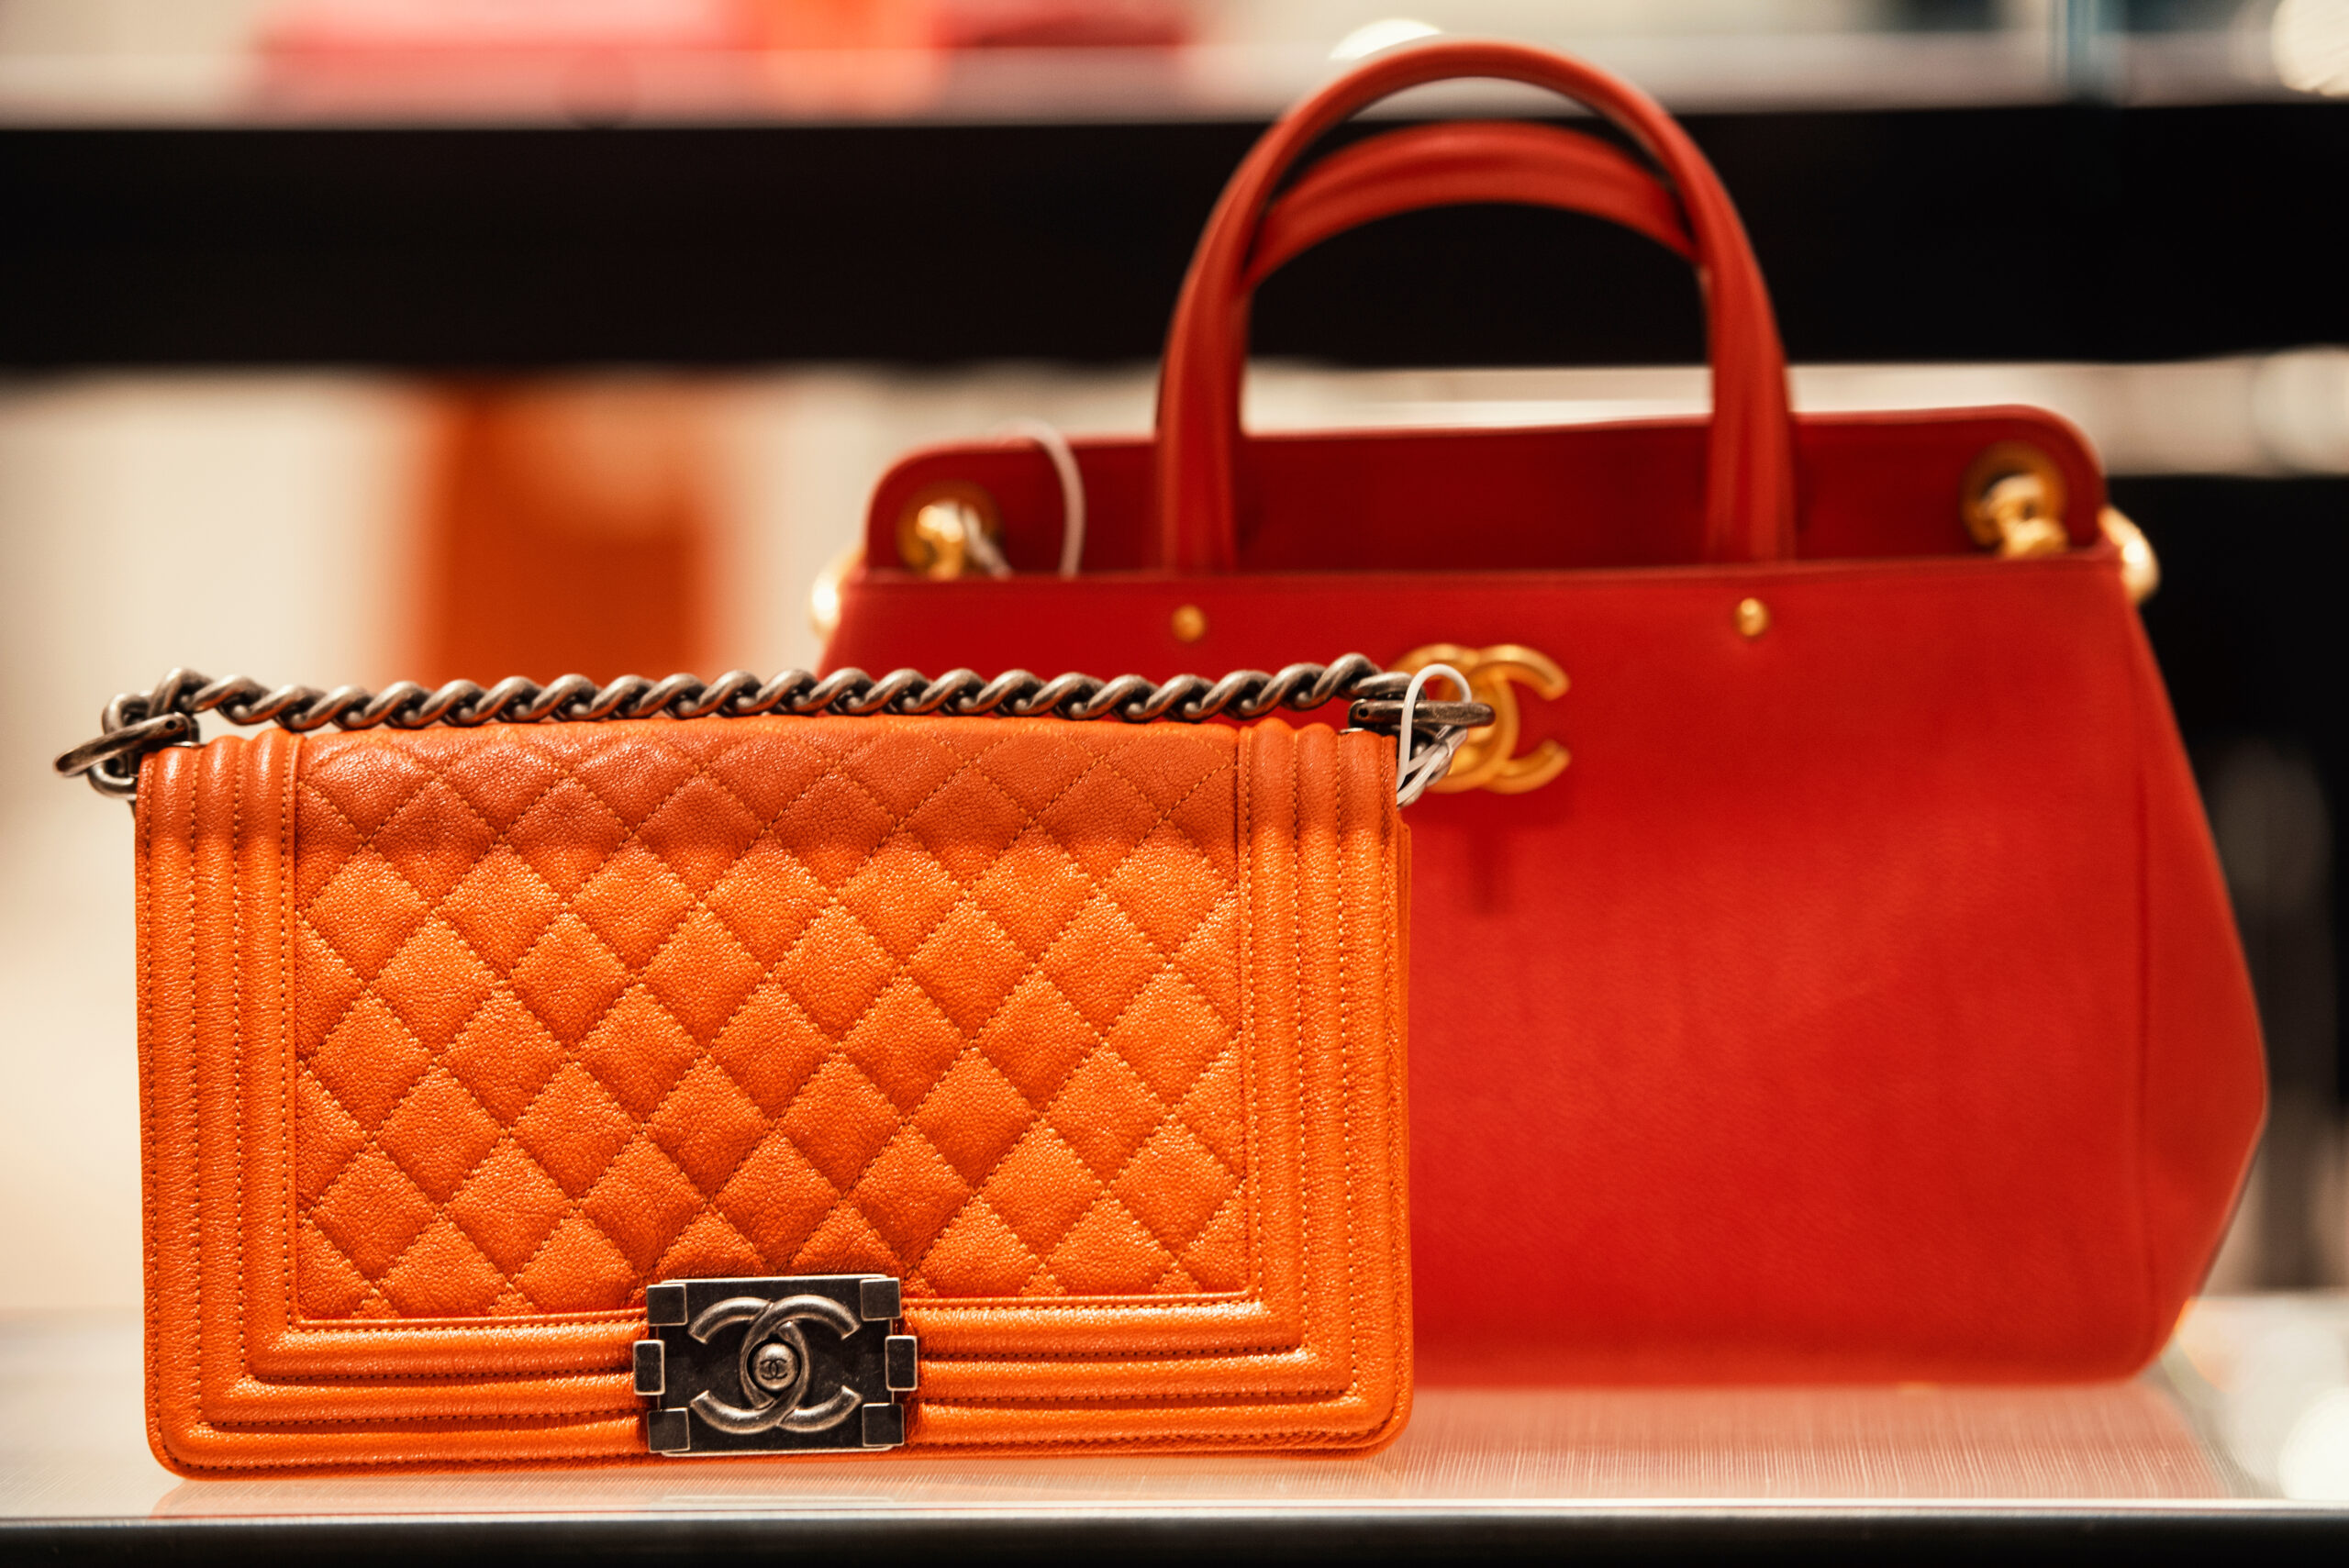 Orange and Red Chanel Handbags